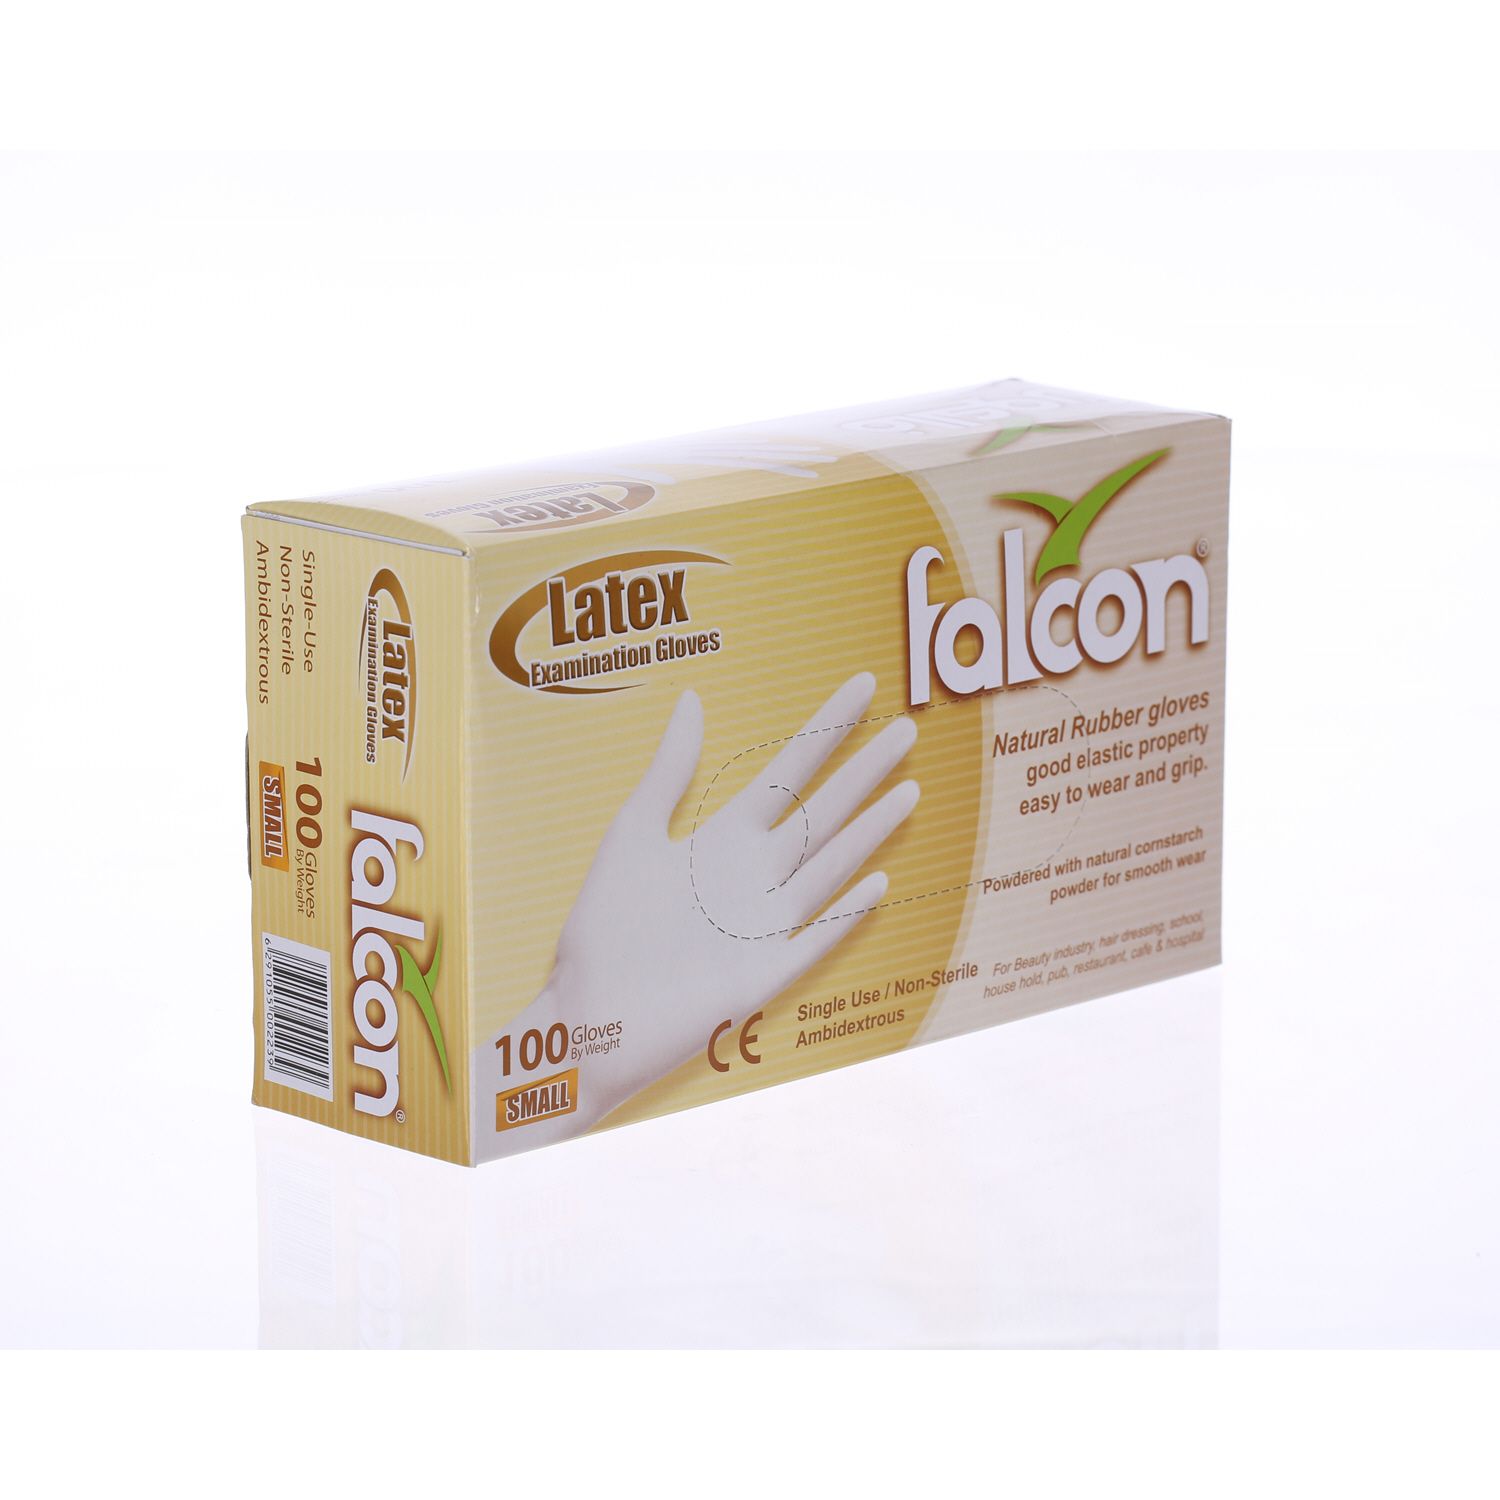 Falcon Latex Gloves Small 100 Pieces